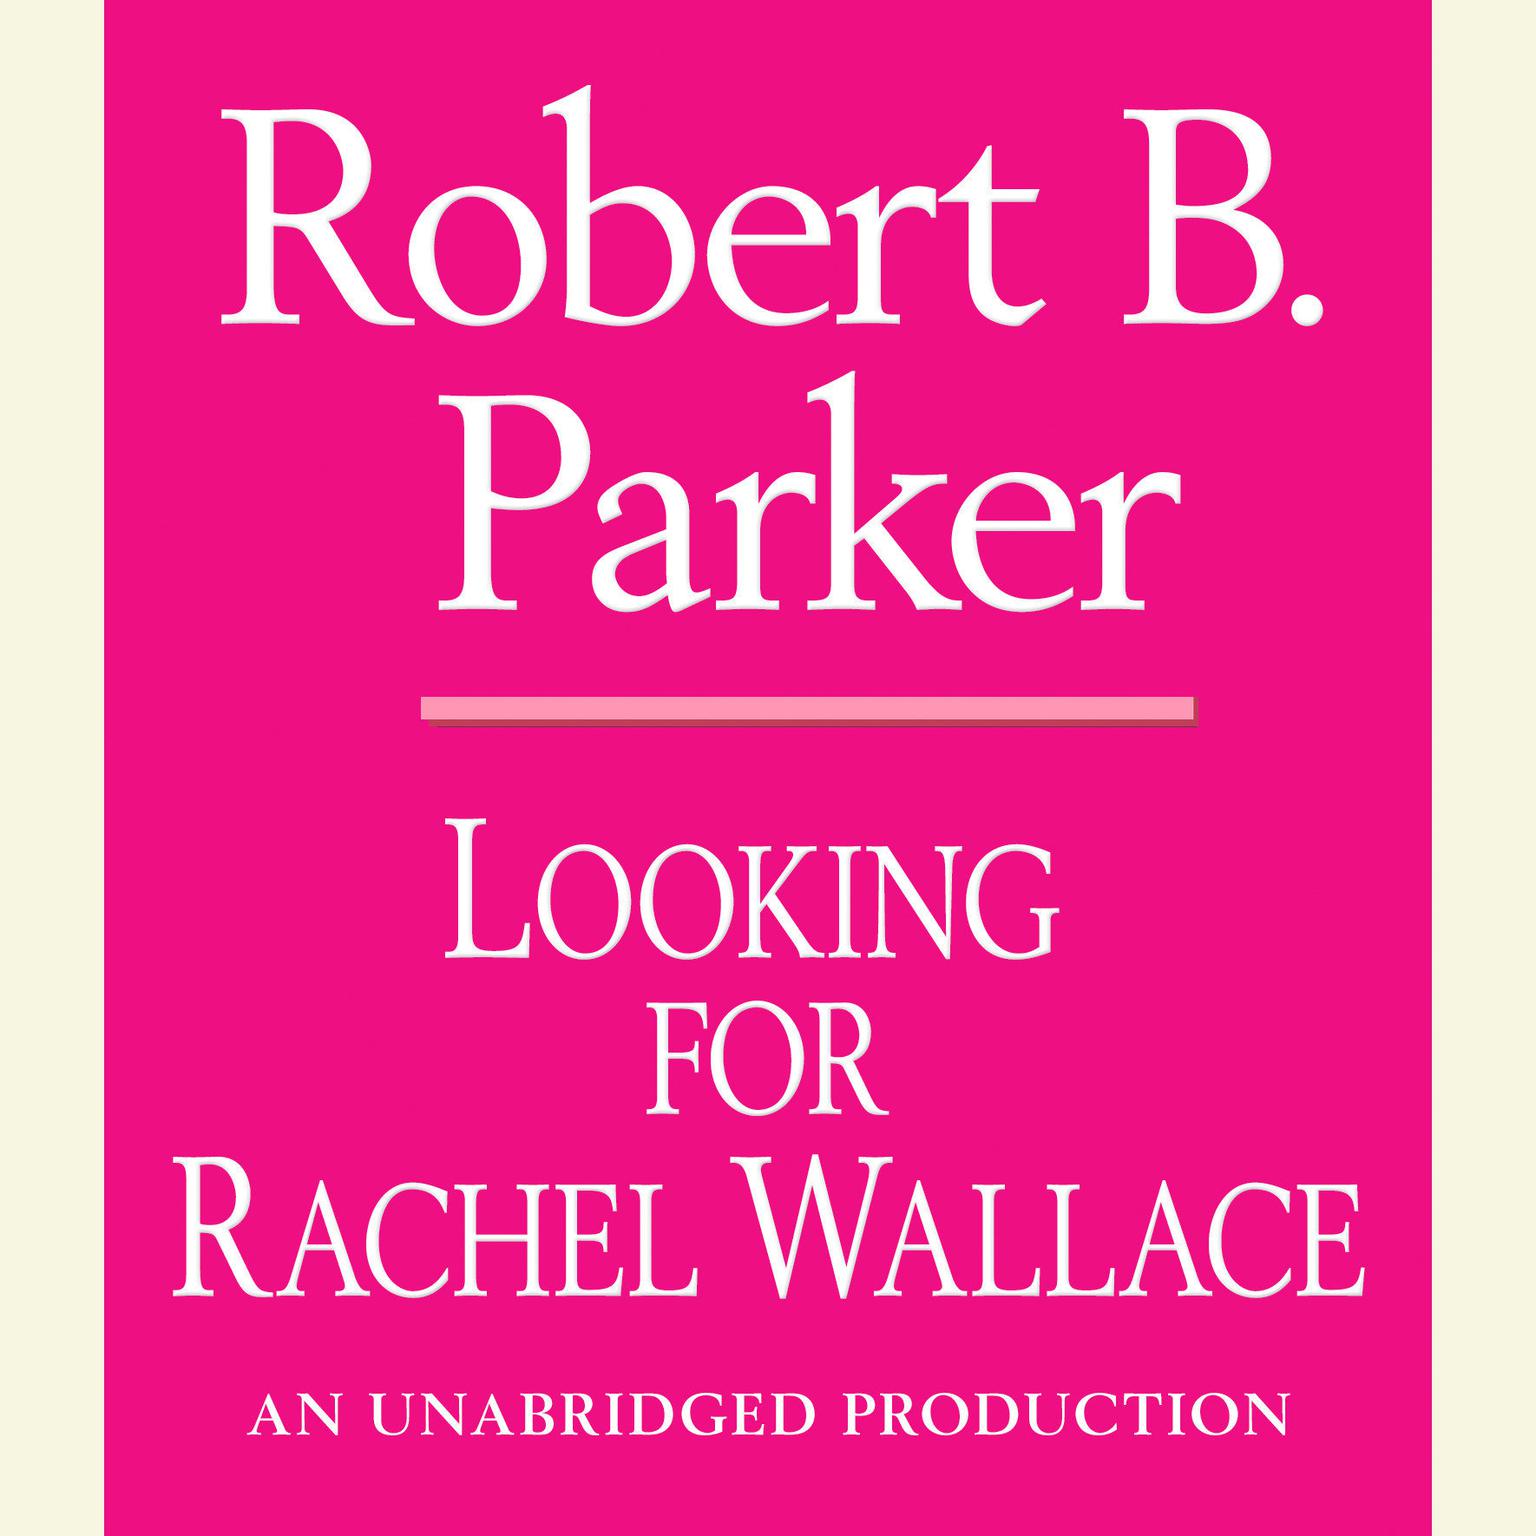 Looking for Rachel Wallace Audiobook, by Robert B. Parker